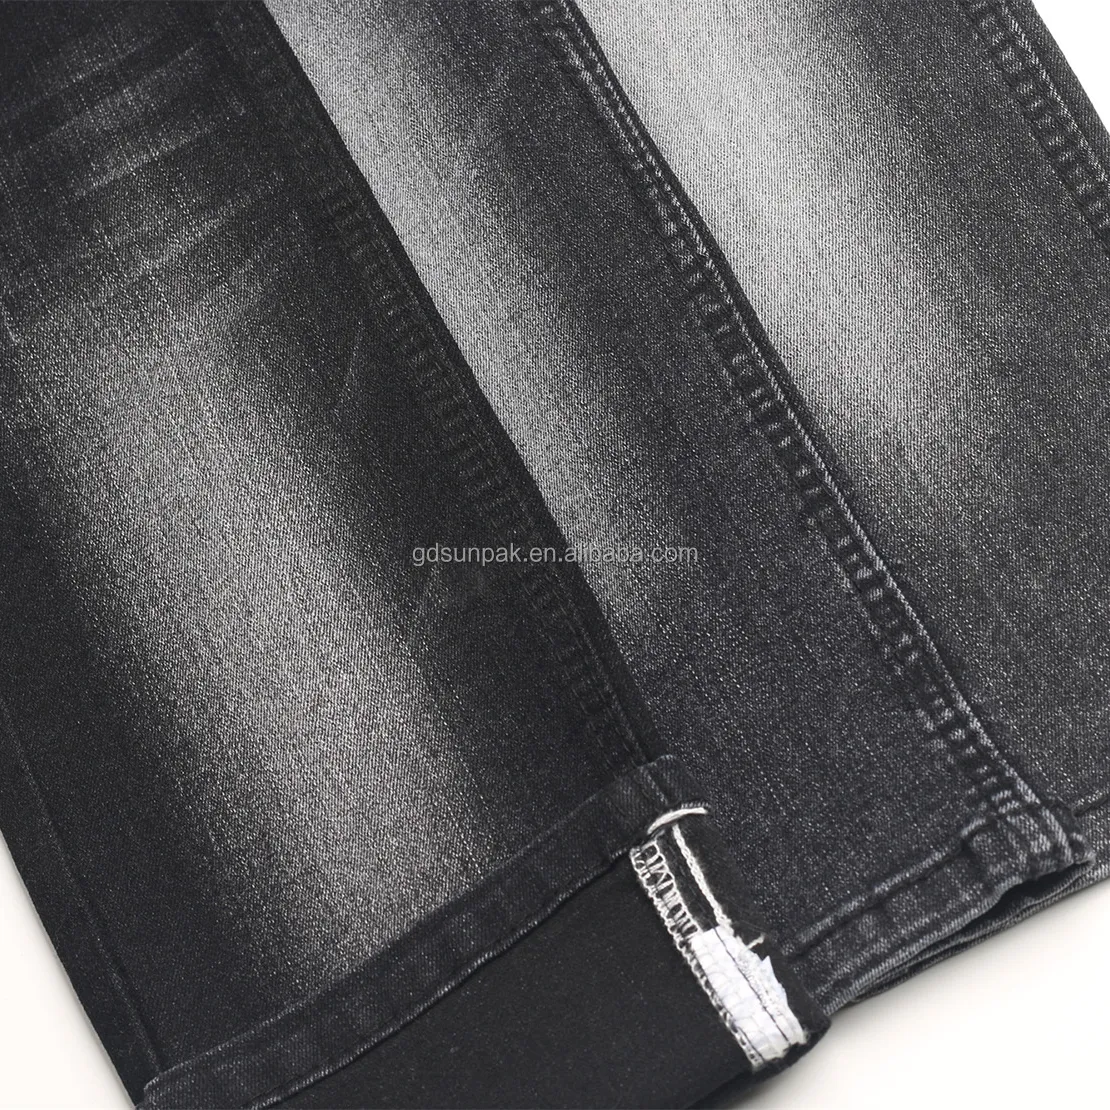 TR kualitas terbaik peregangan tinggi berat Medium 9.3oz B/W Warp Slubby hitam Jeans kain untuk pria P9123-1 #